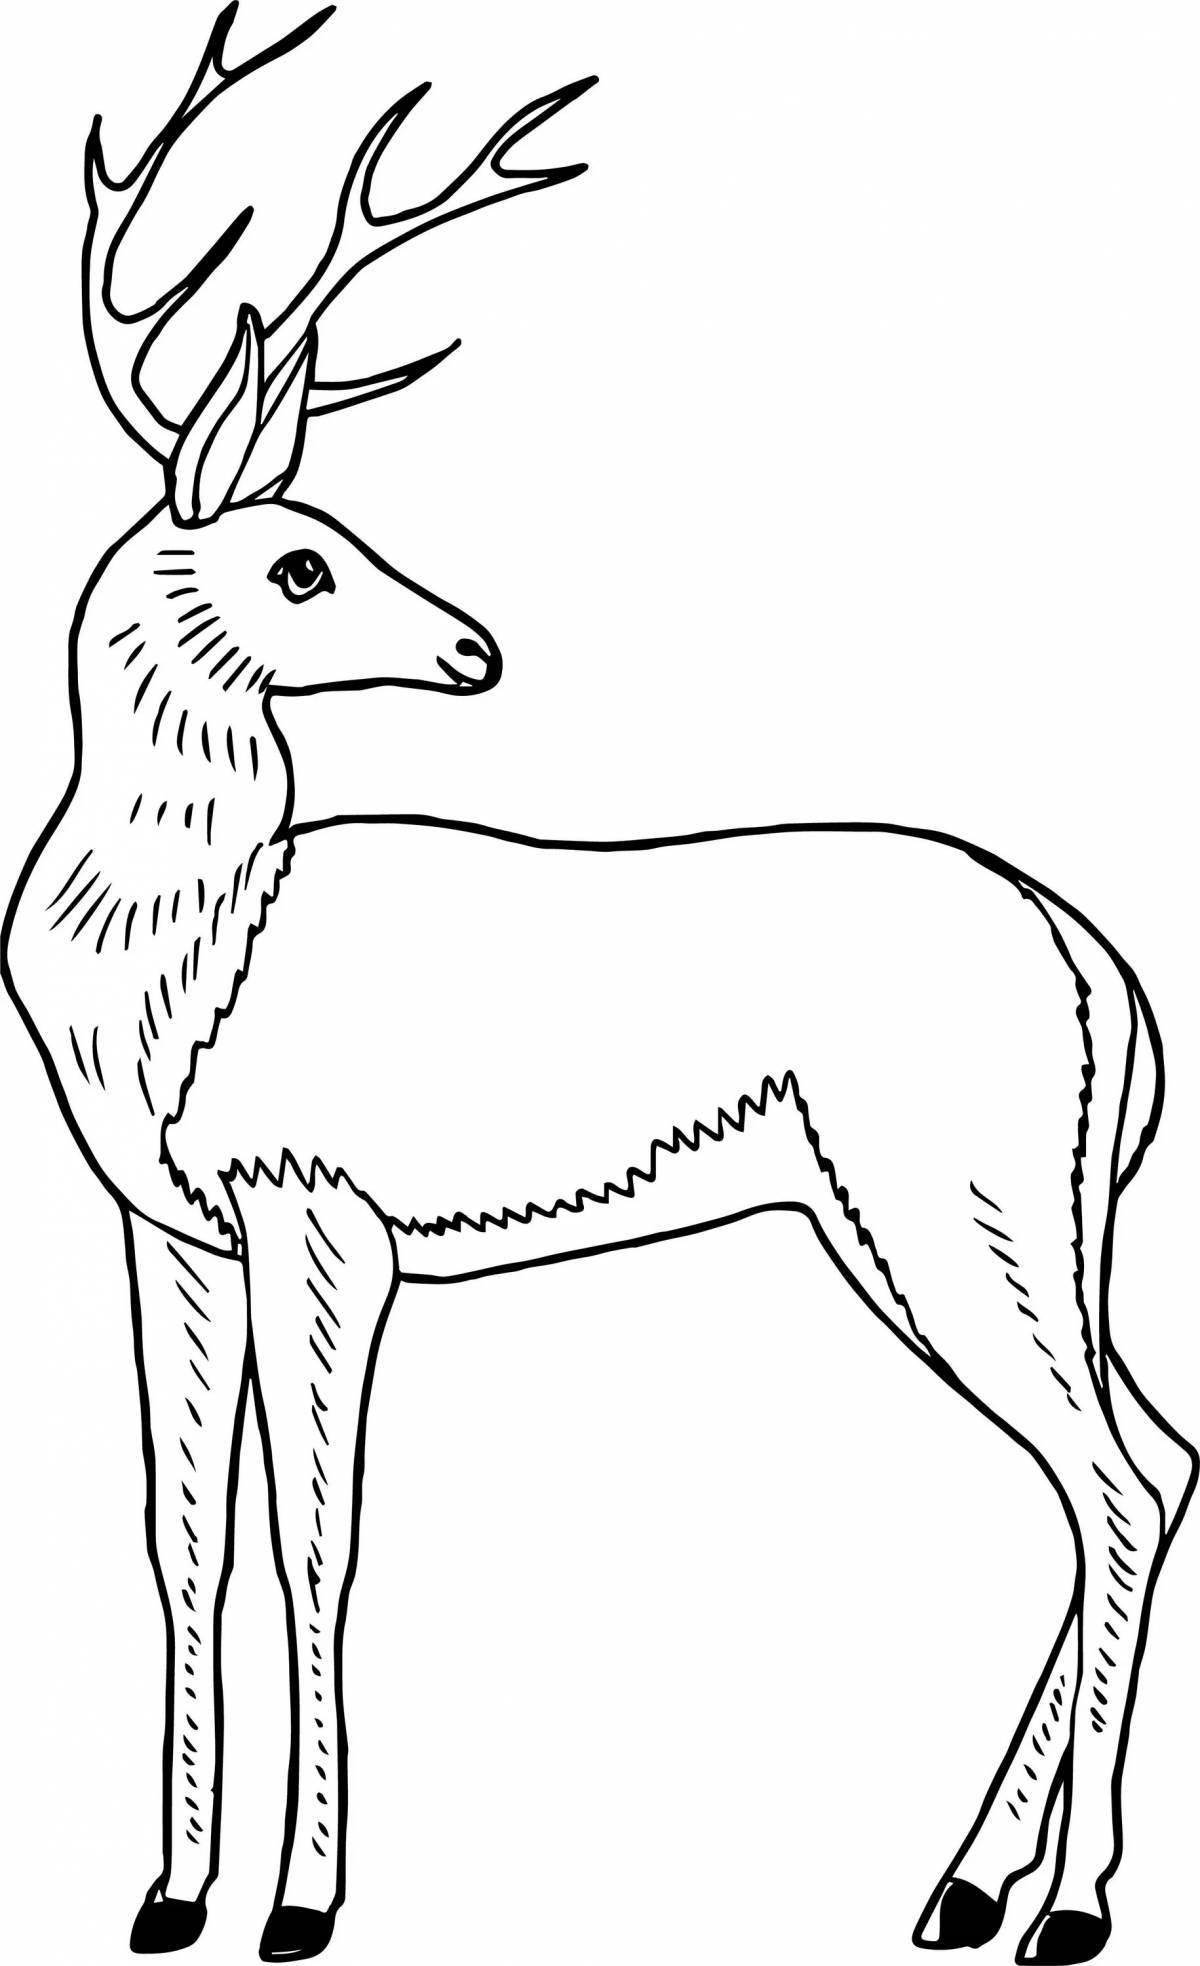 Colouring delightful siberian roe deer